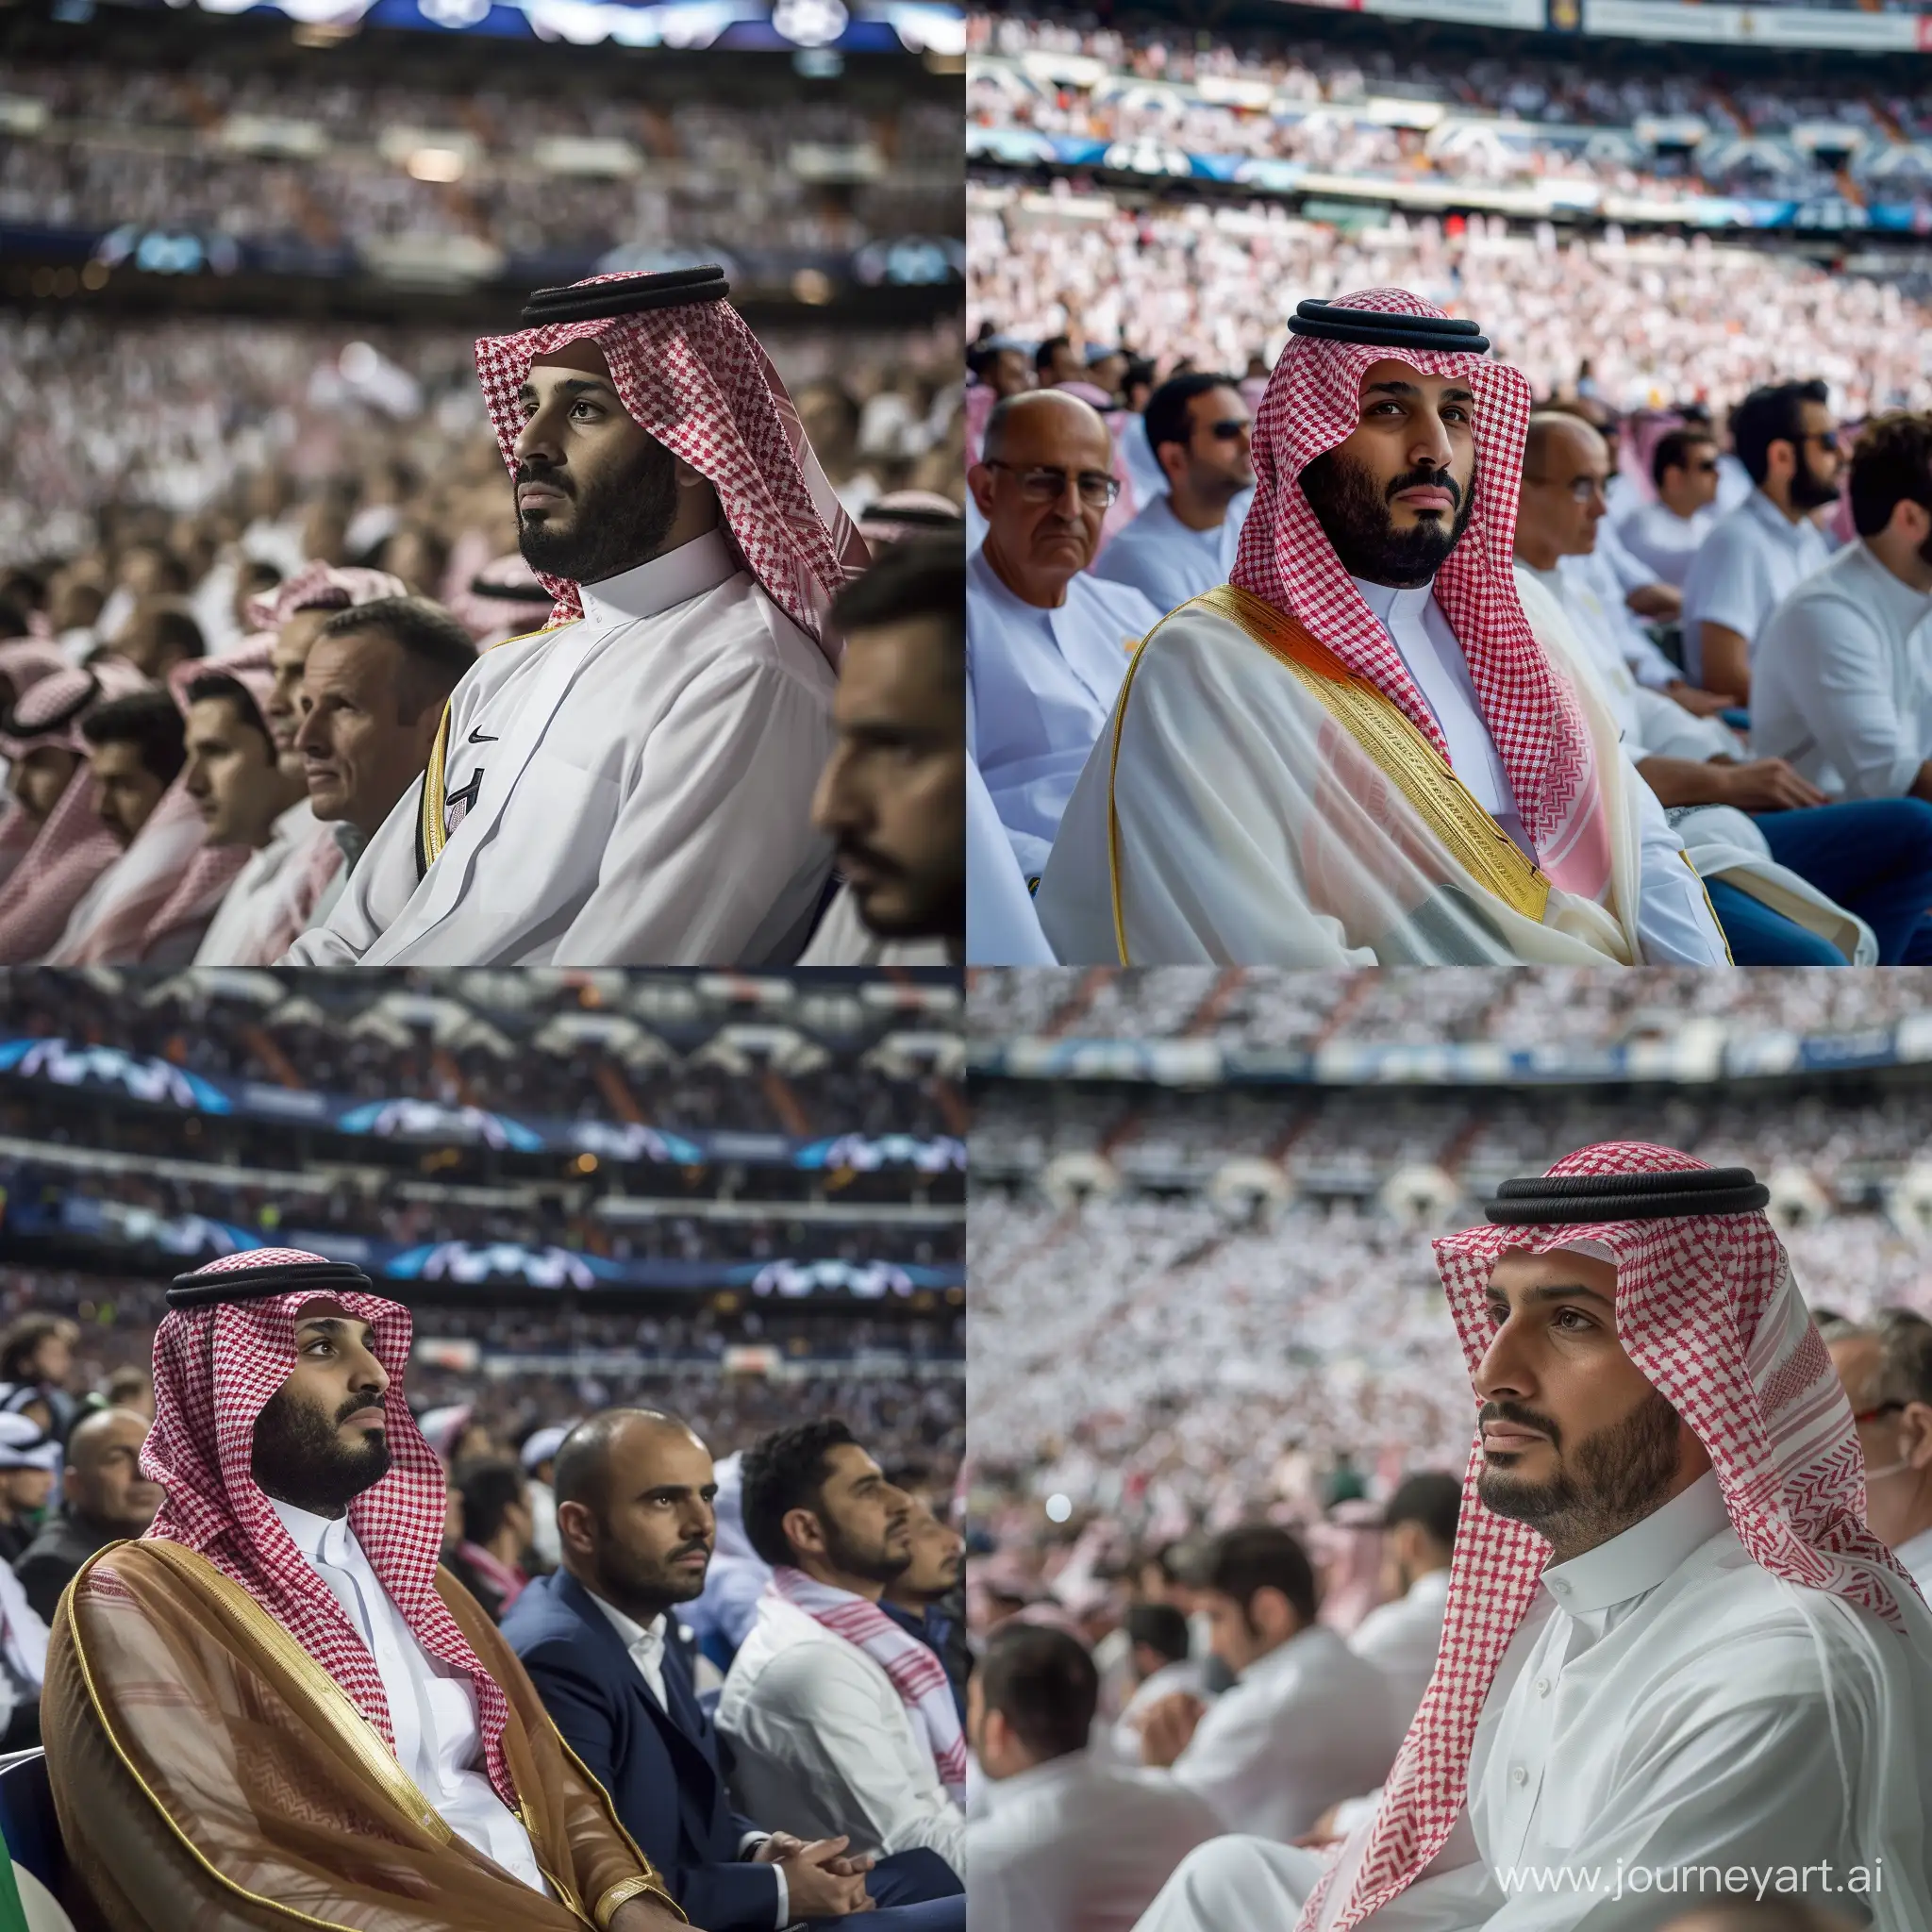 Saudi-Man-in-Traditional-Attire-Amidst-Spanish-Fans-at-Santiago-Bernabu-Stadium